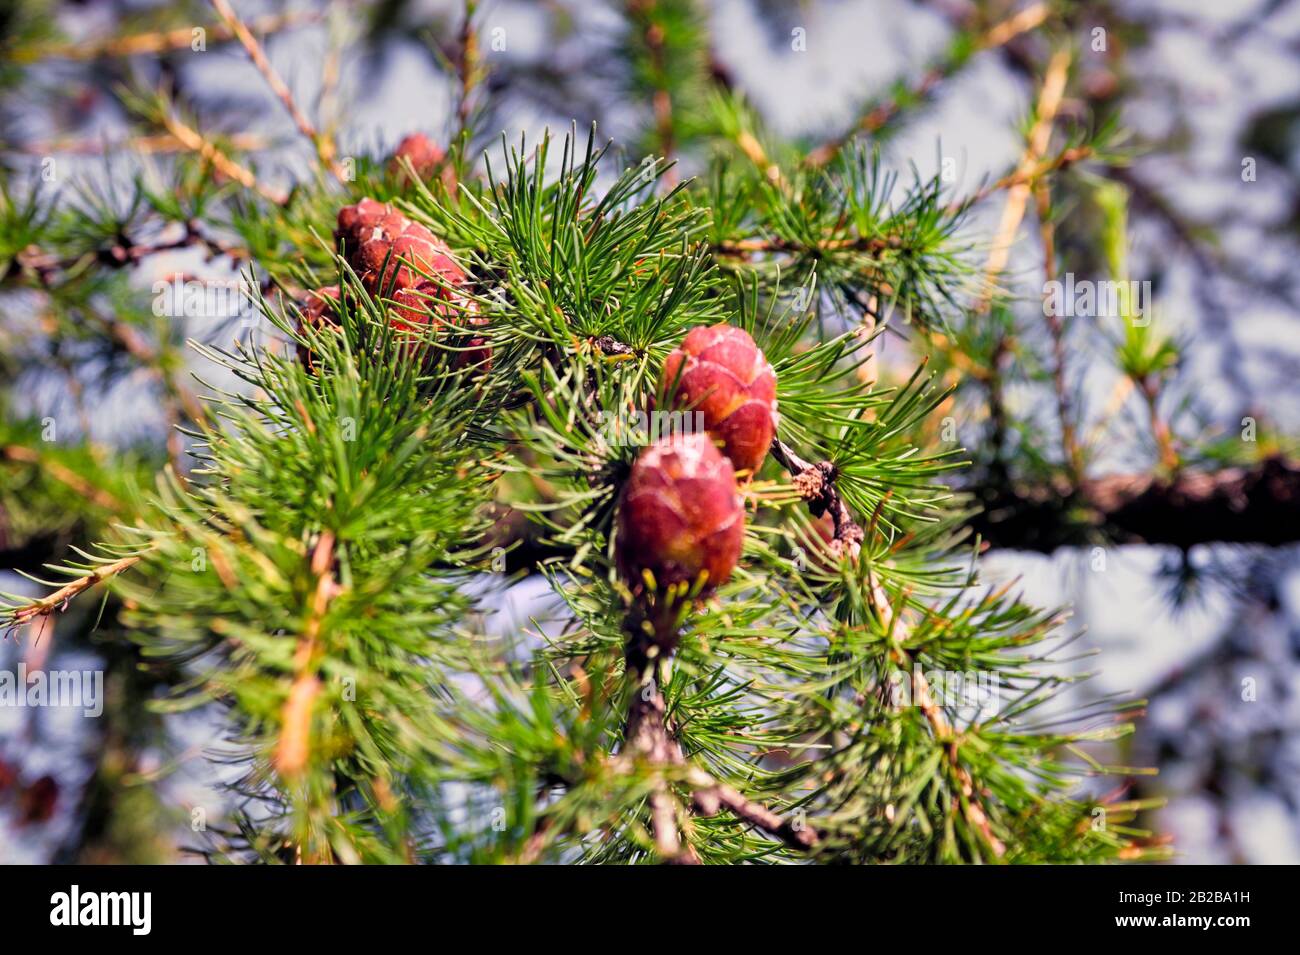 European larch tree. Larix decidua. Cones on a branch with green needles. Stock Photo